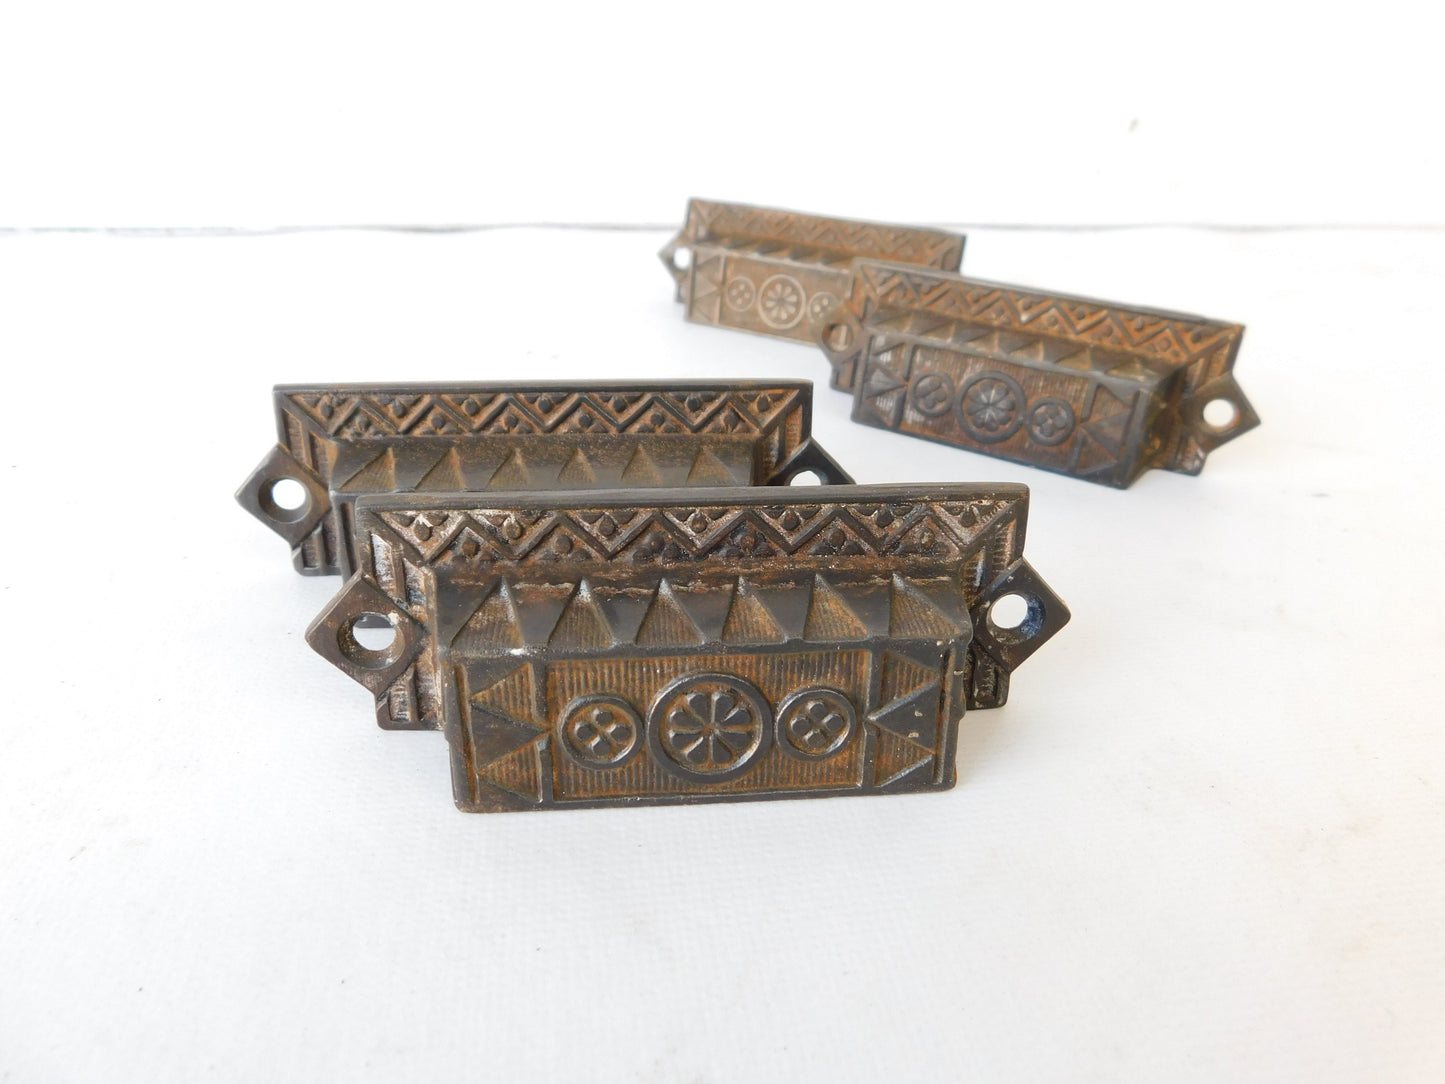 Four Antique Cast Iron Eastlake Handles with Fancy Design, Four Old Ornate Bin Pulls